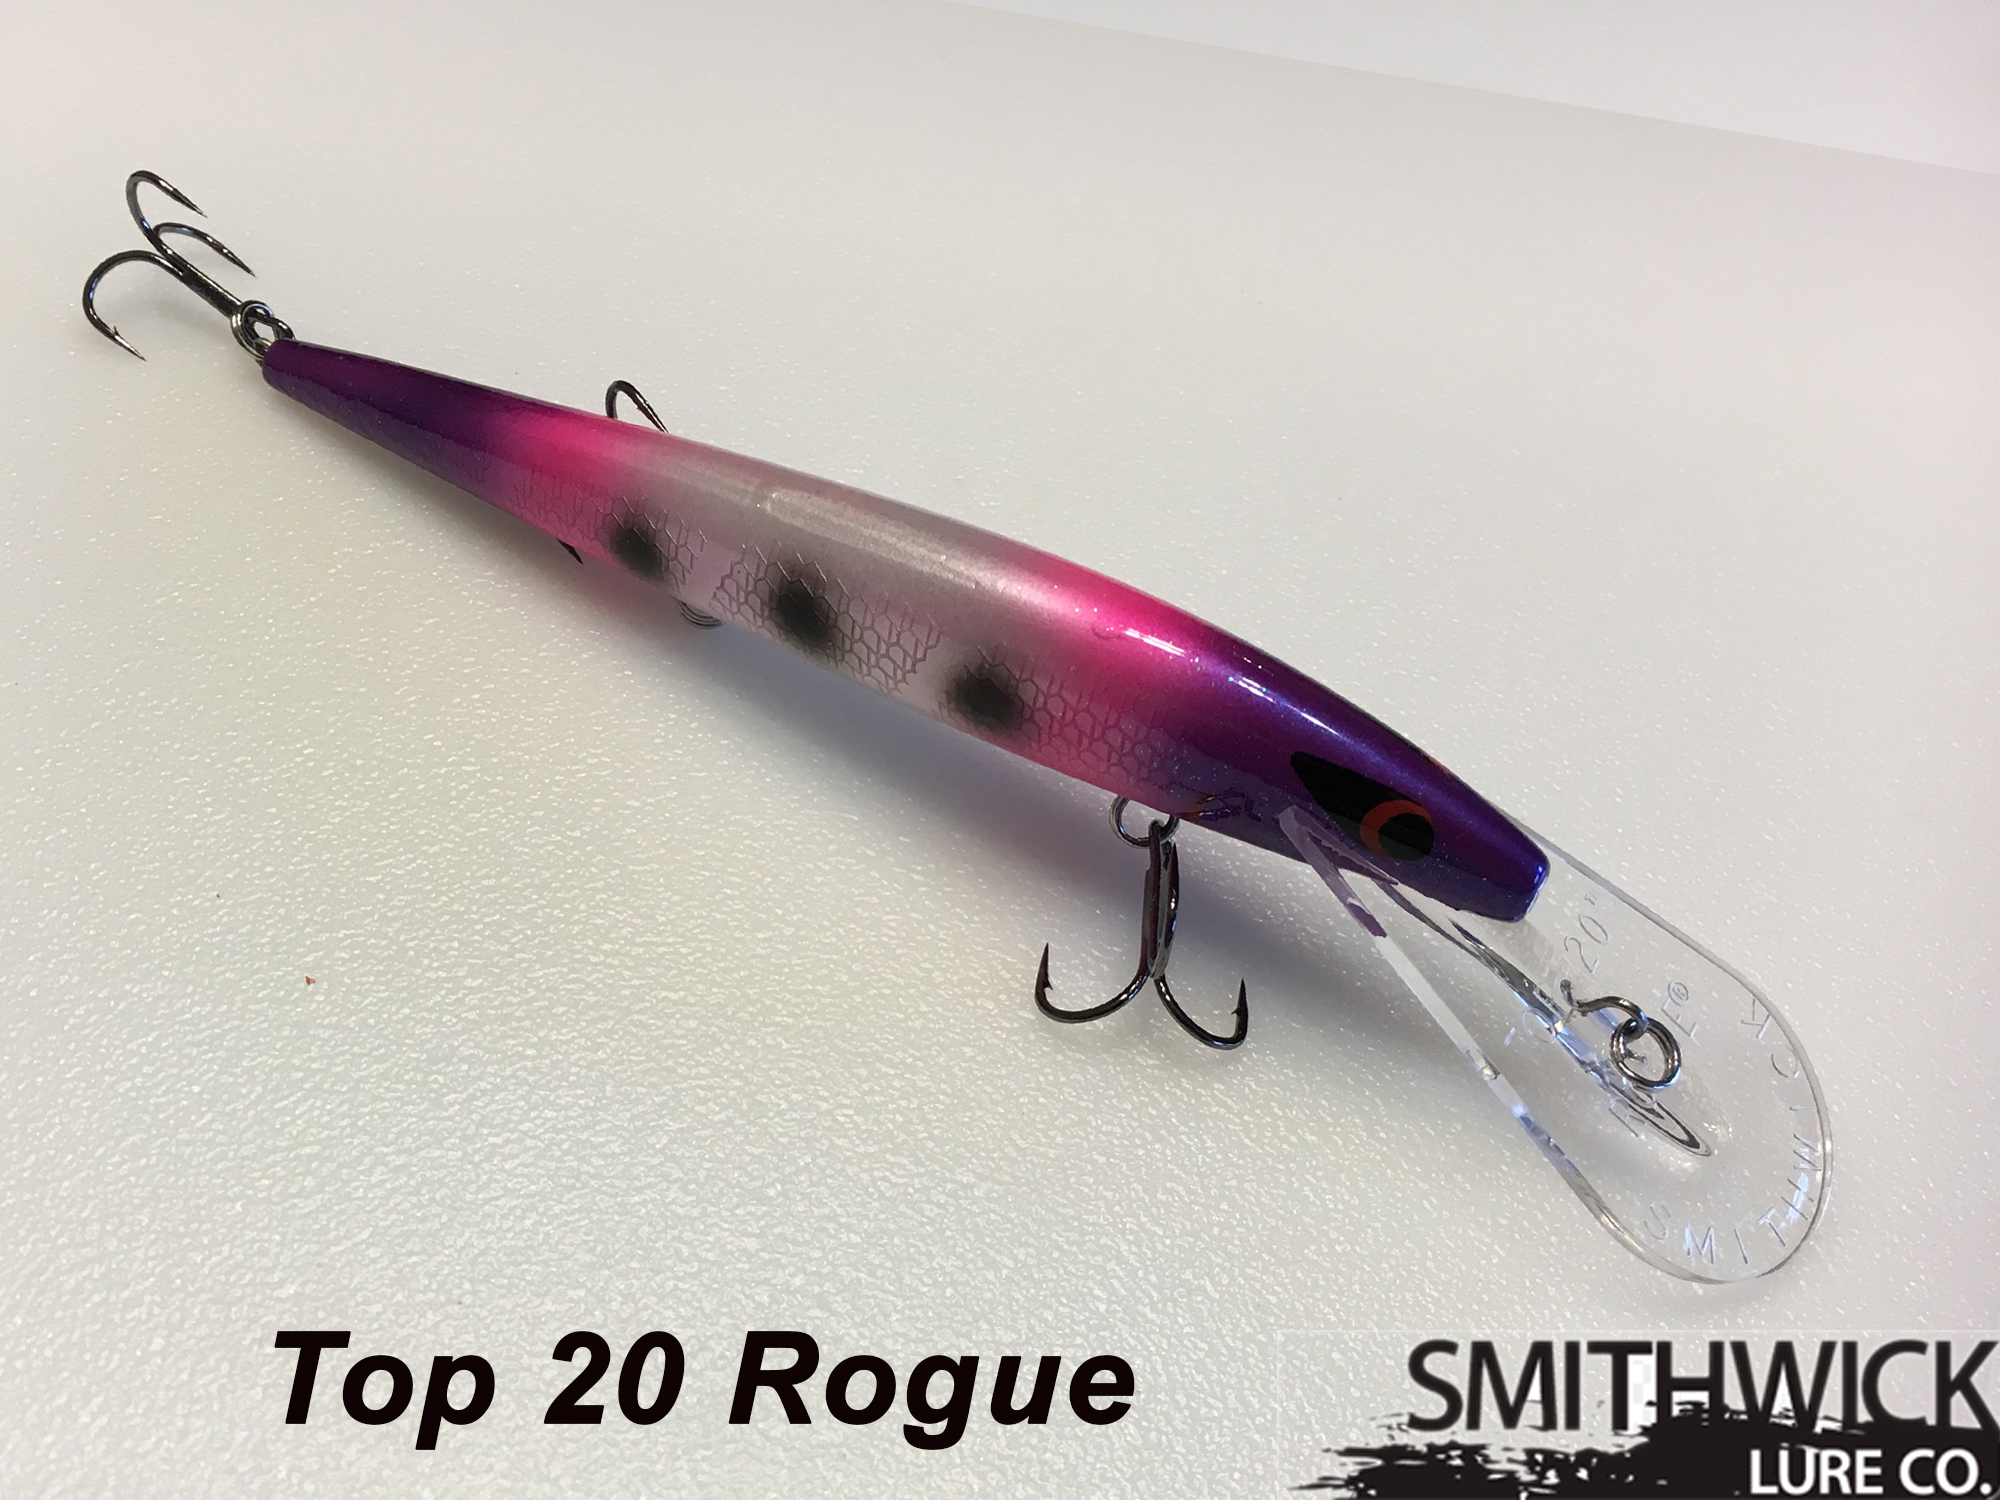 Smithwick Top 20 Rogue